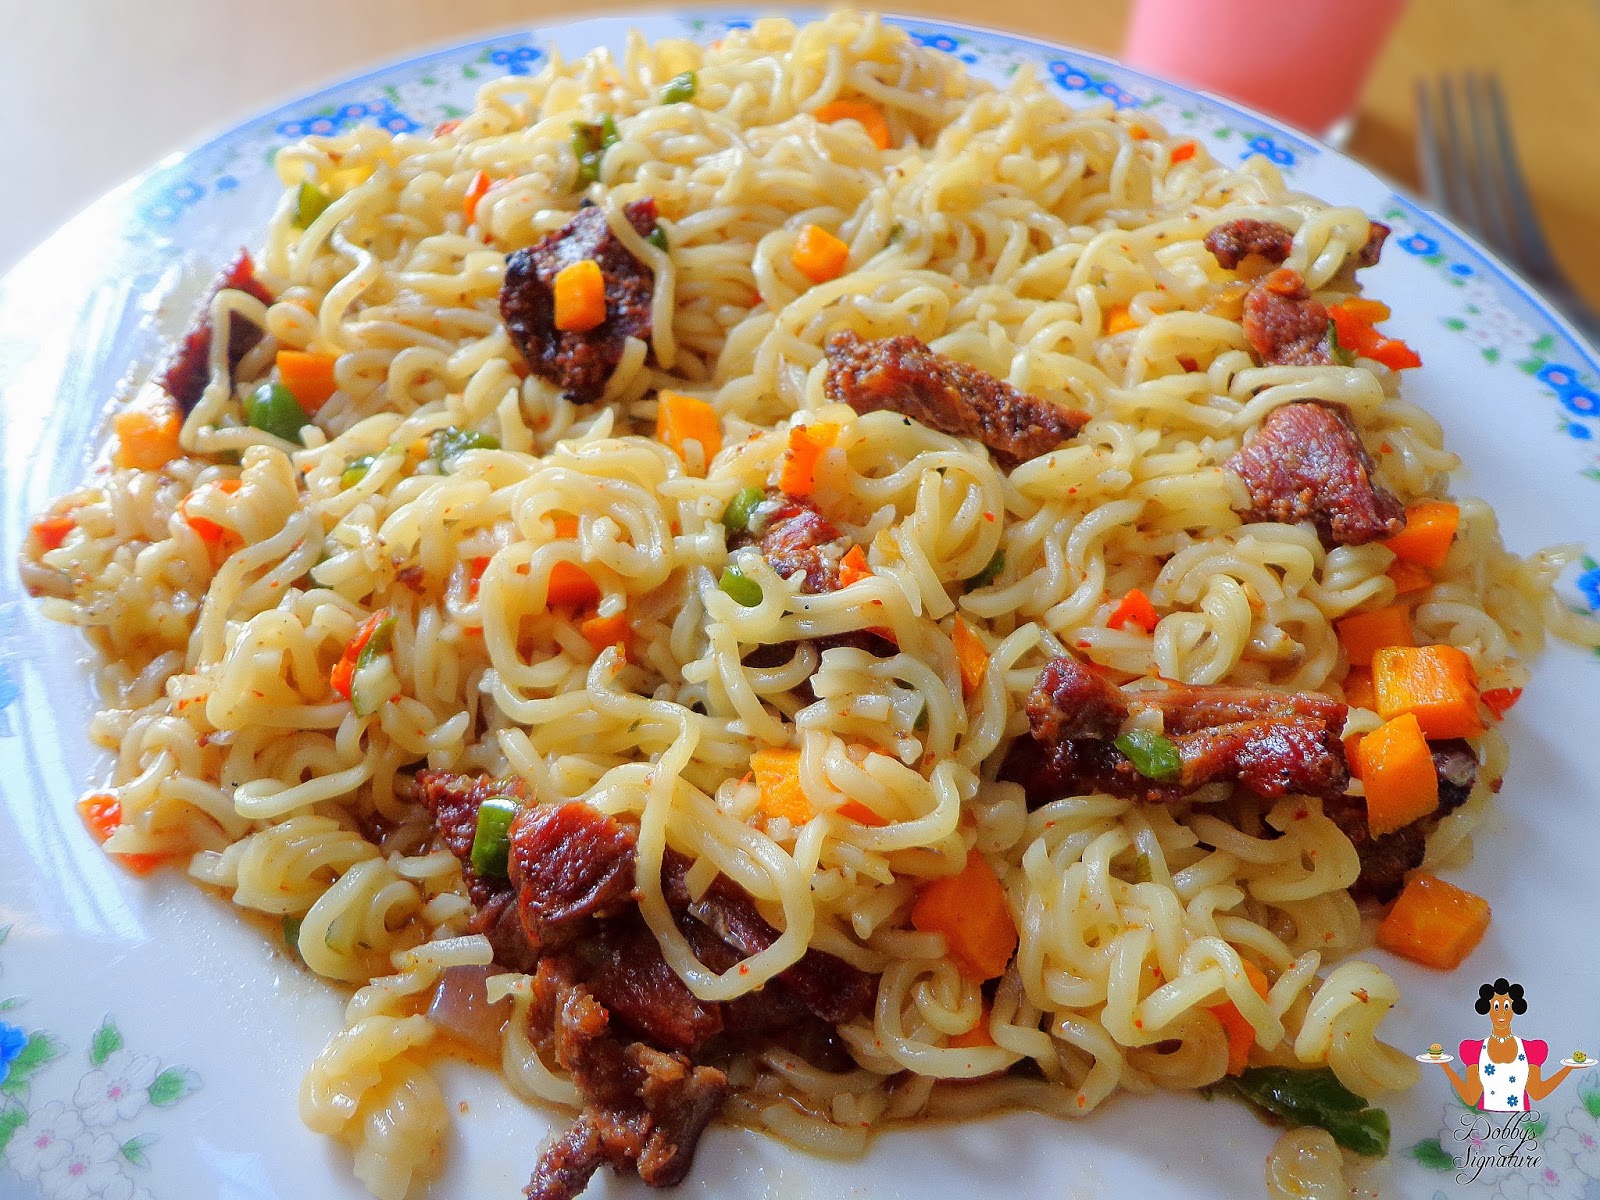 Nigerian Indomie noodles